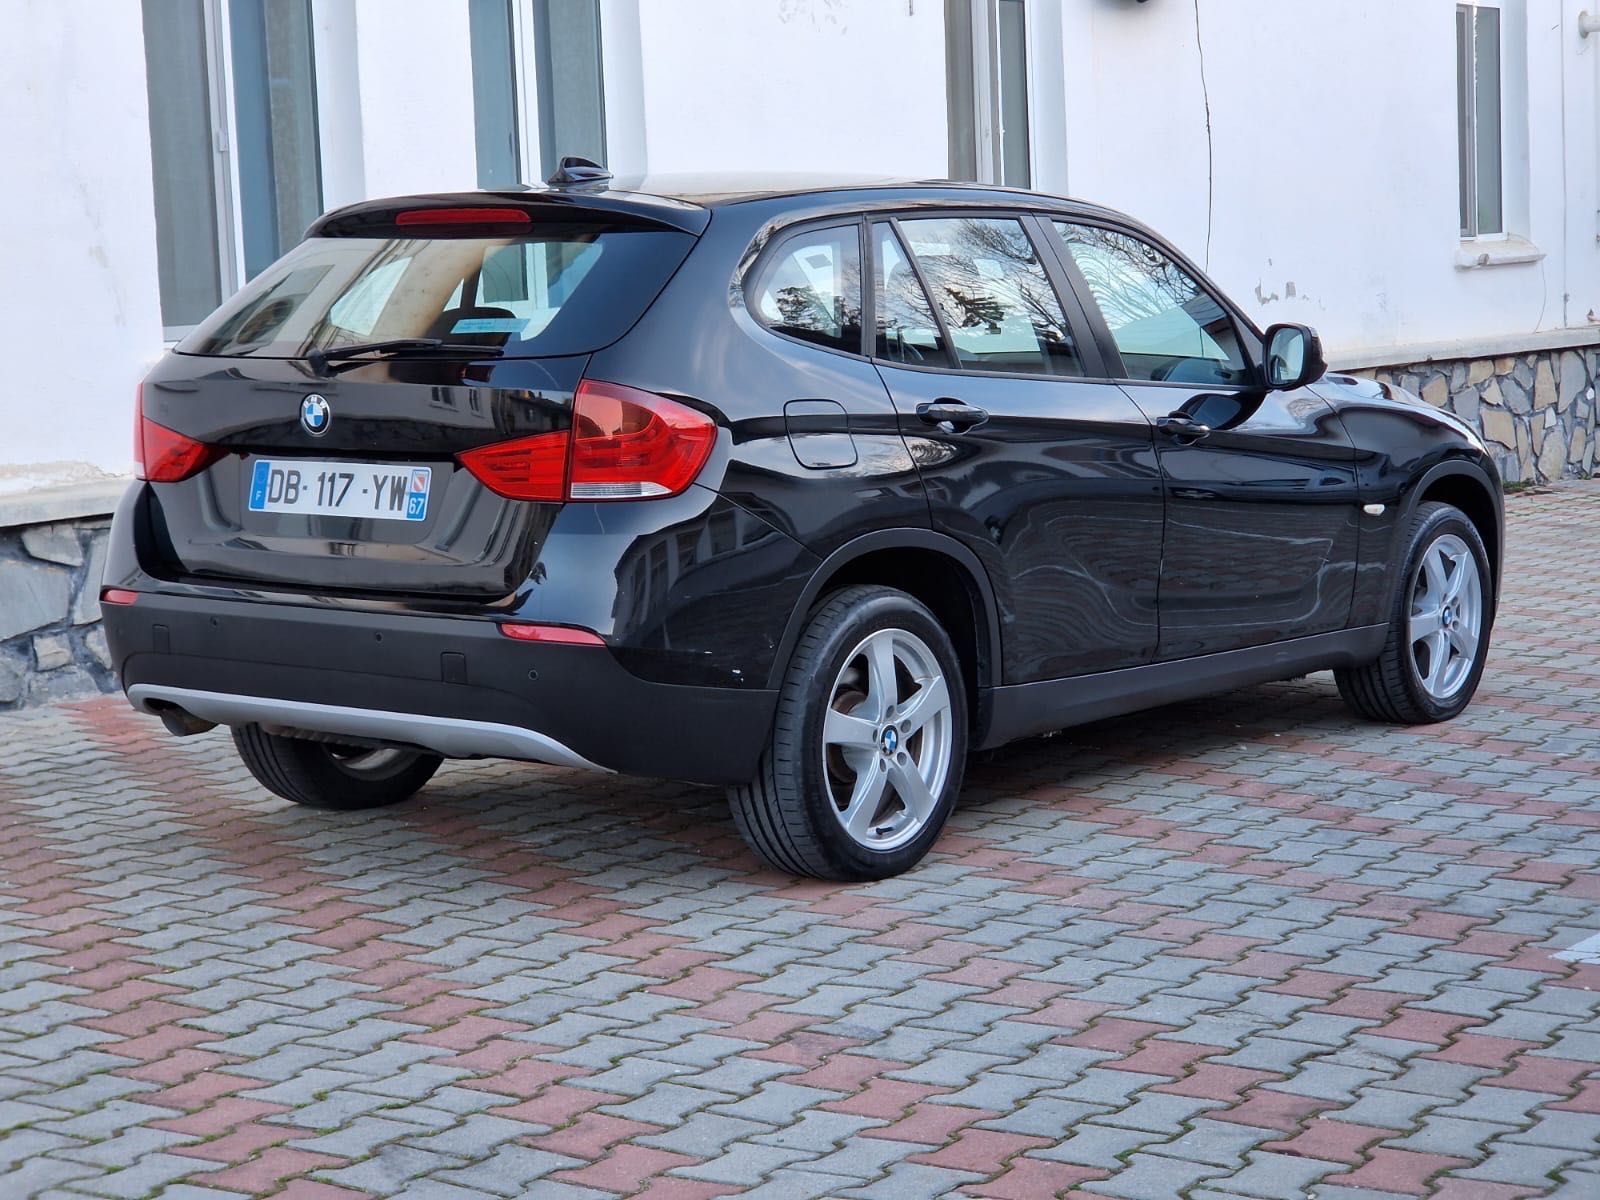 BMW X1 4X4 2012 - 2.0D 143CP | Recent Adus